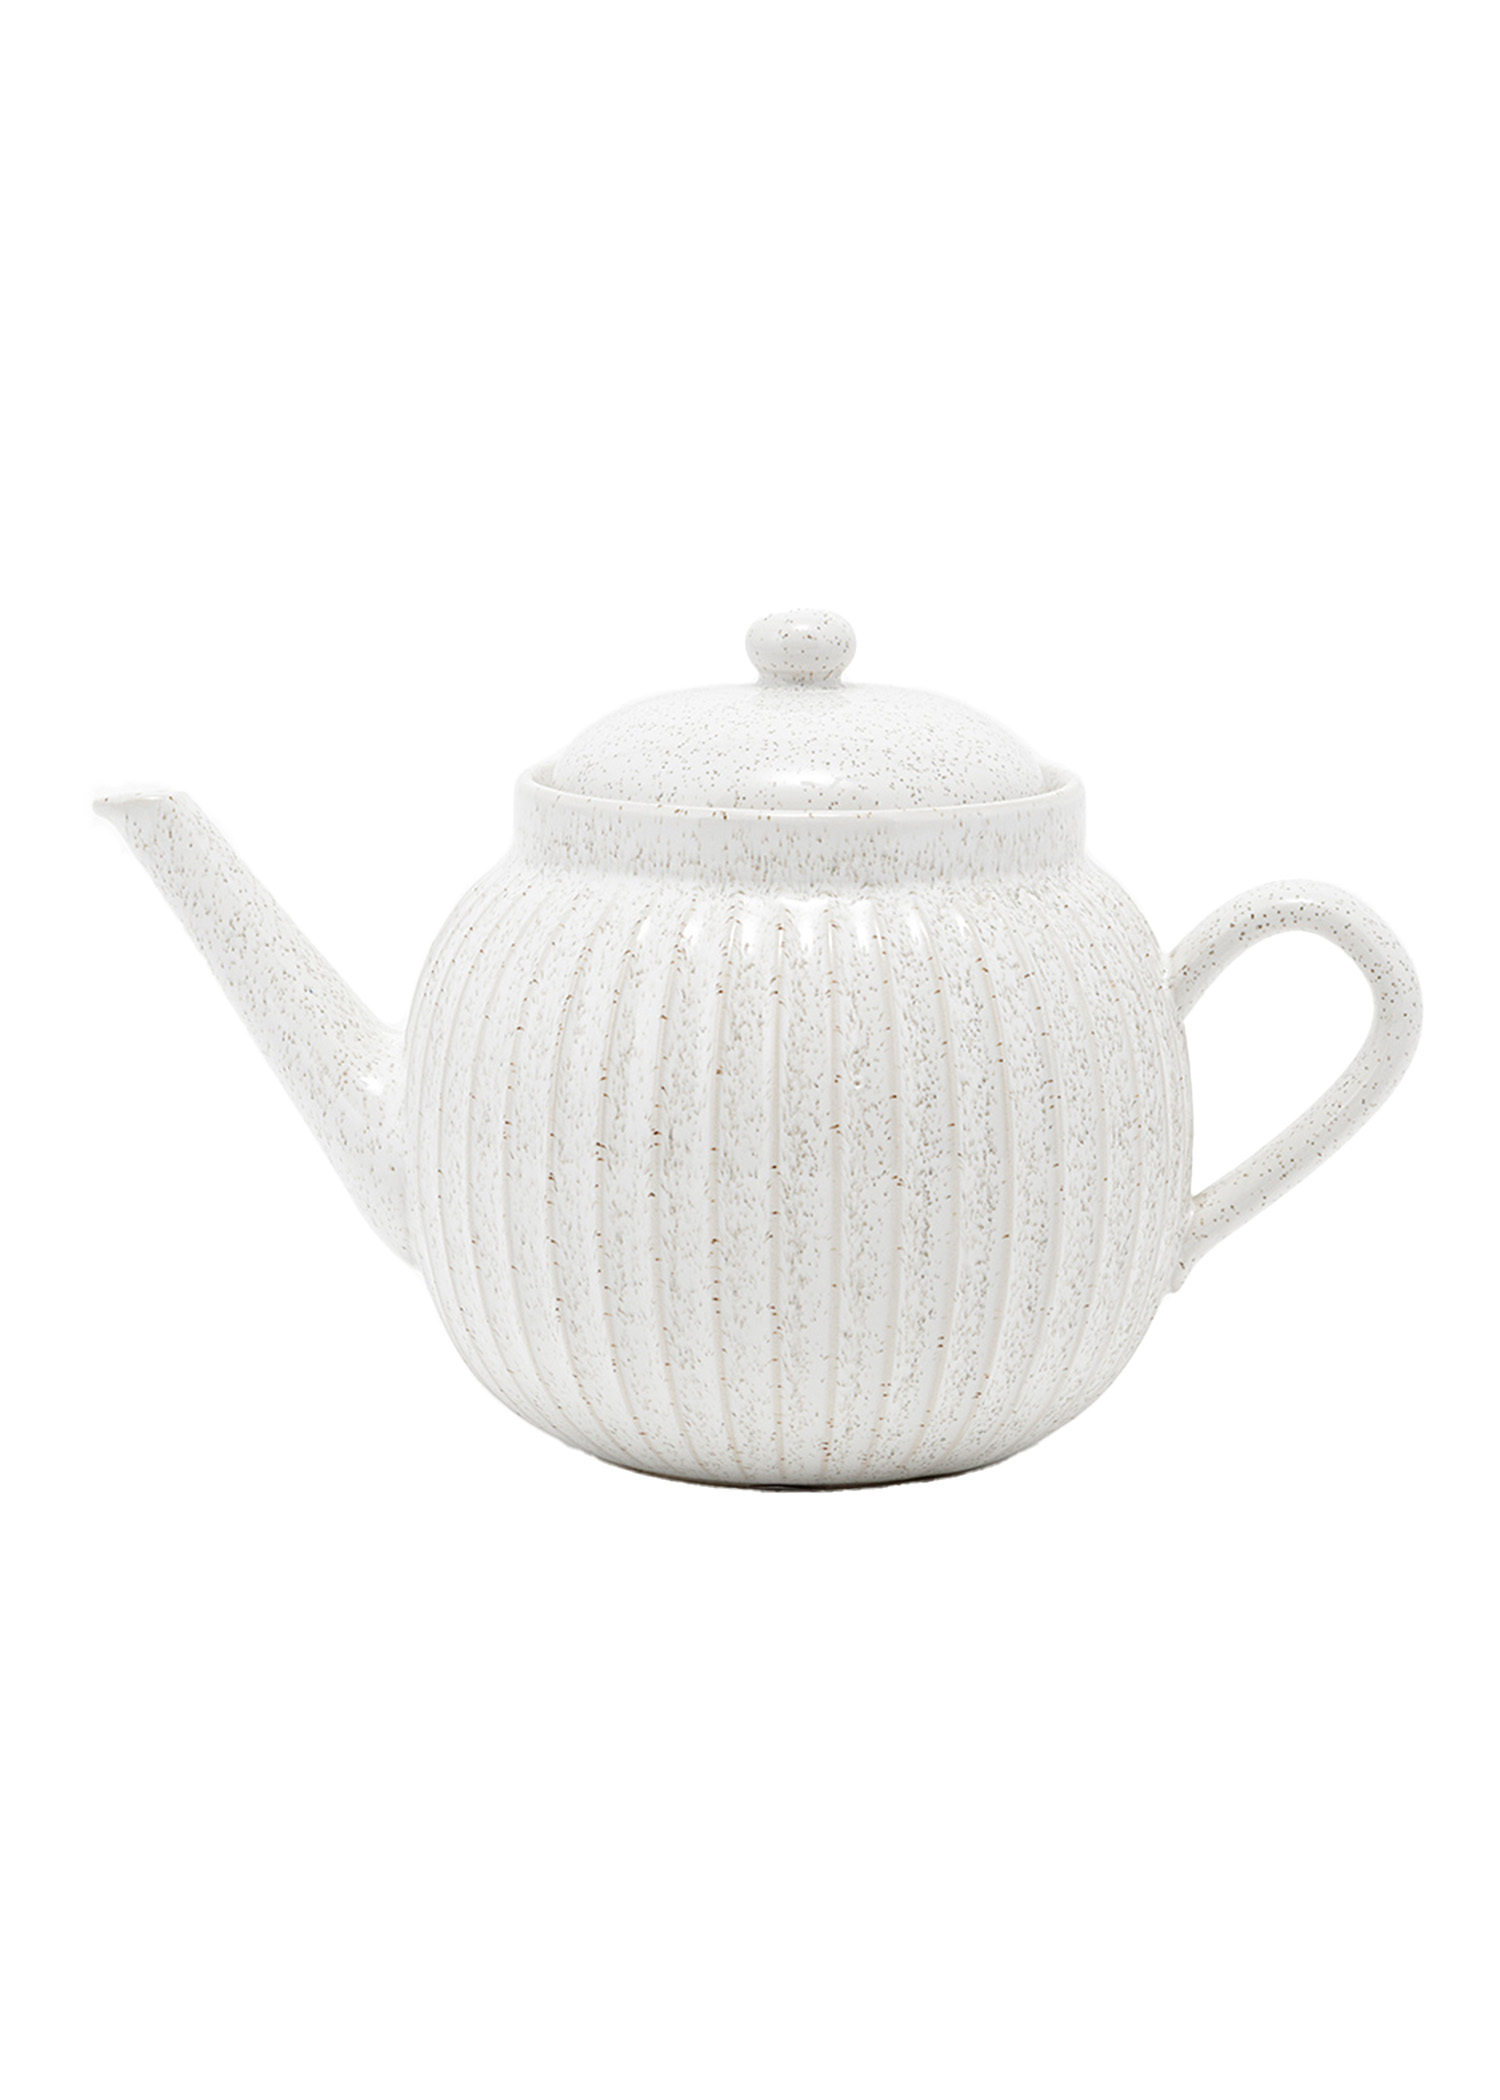 Beige stoneware teapot Image 0